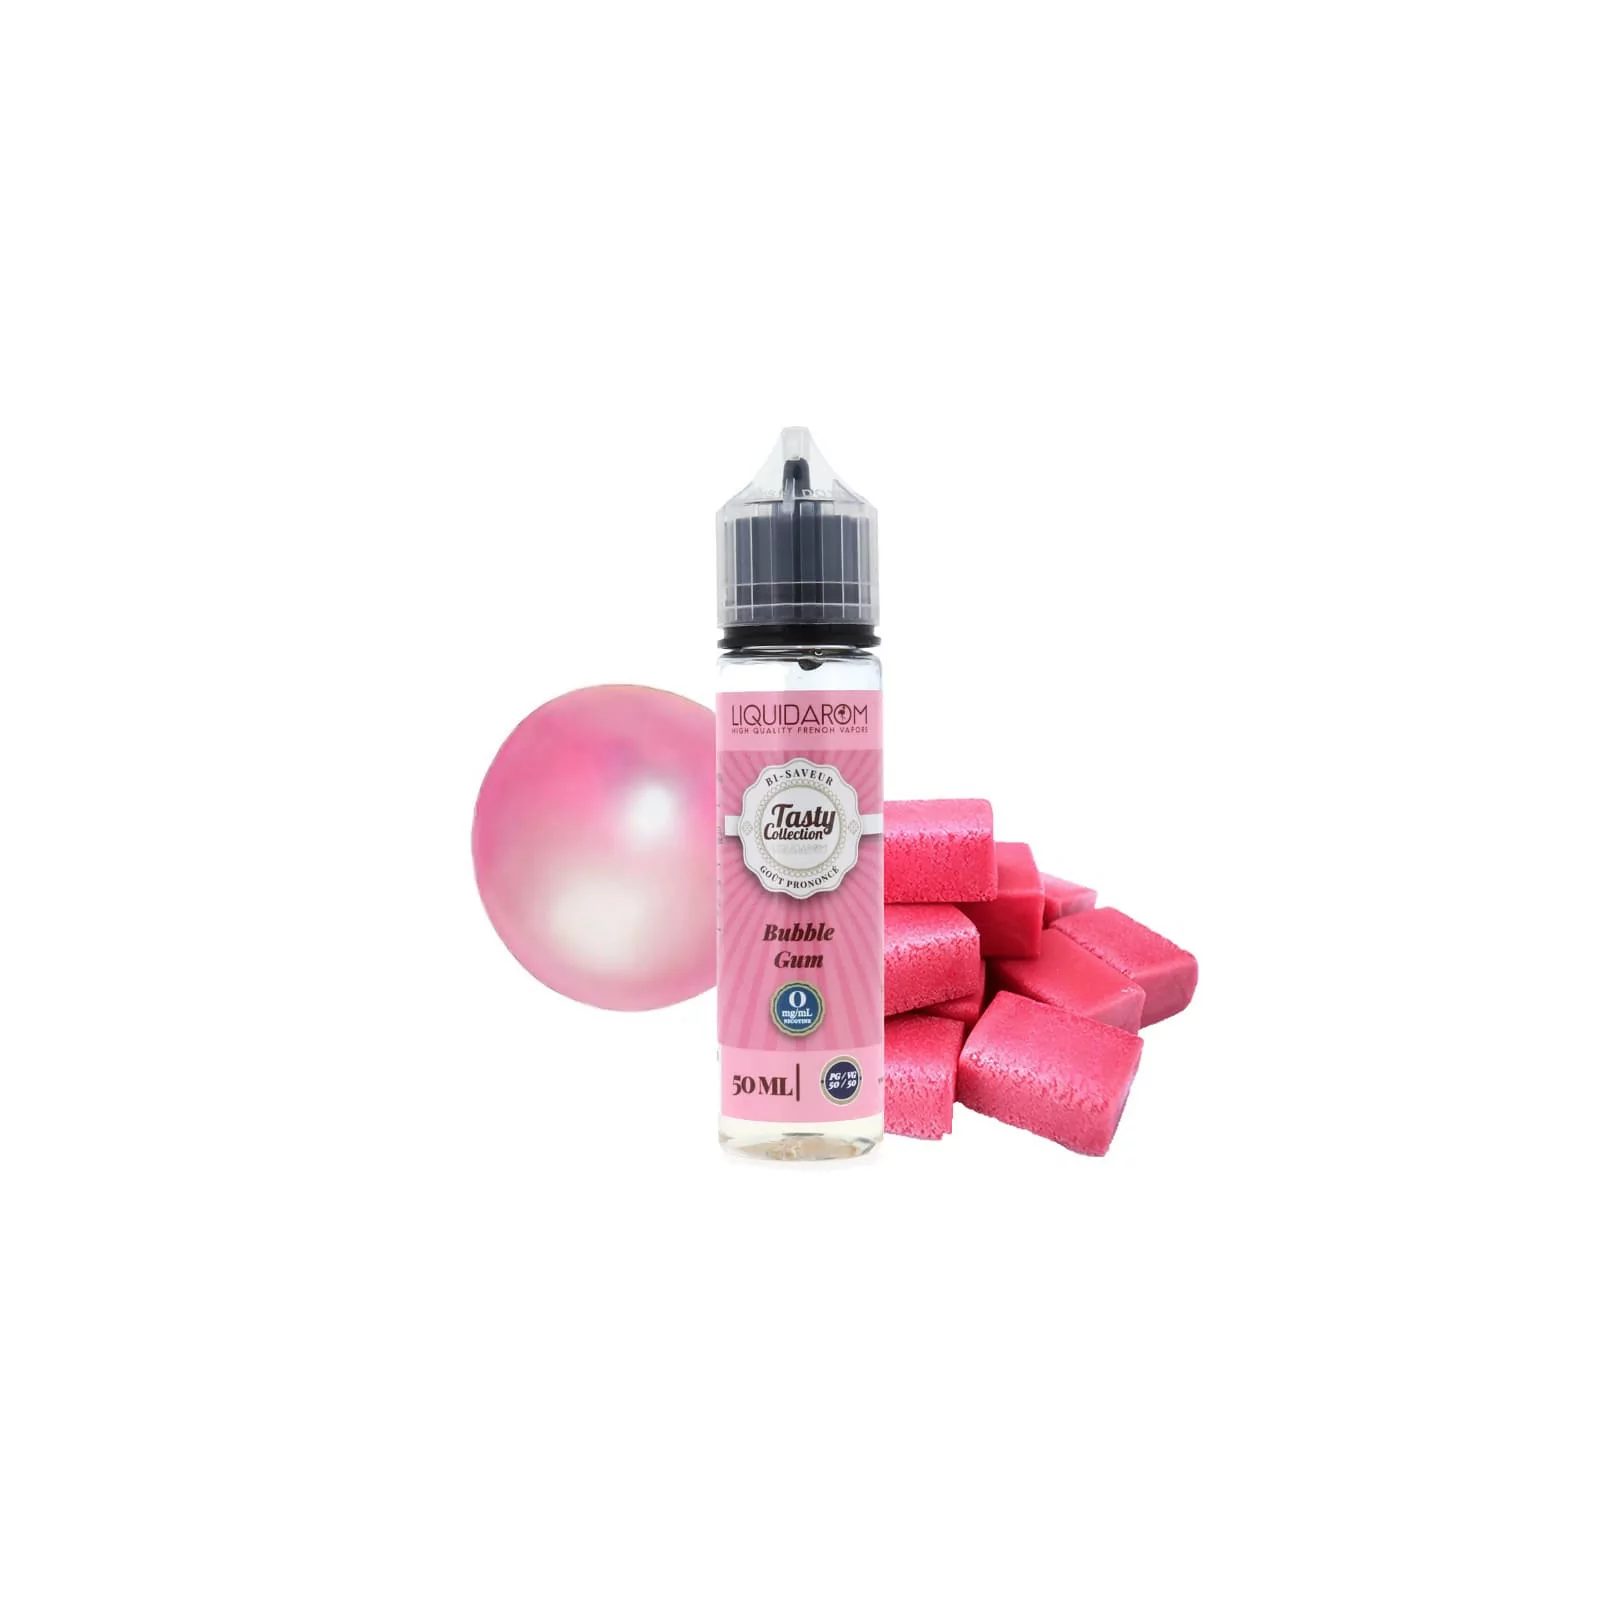 Bubble Gum Tasty Collection 50ml - Liquid'Arom